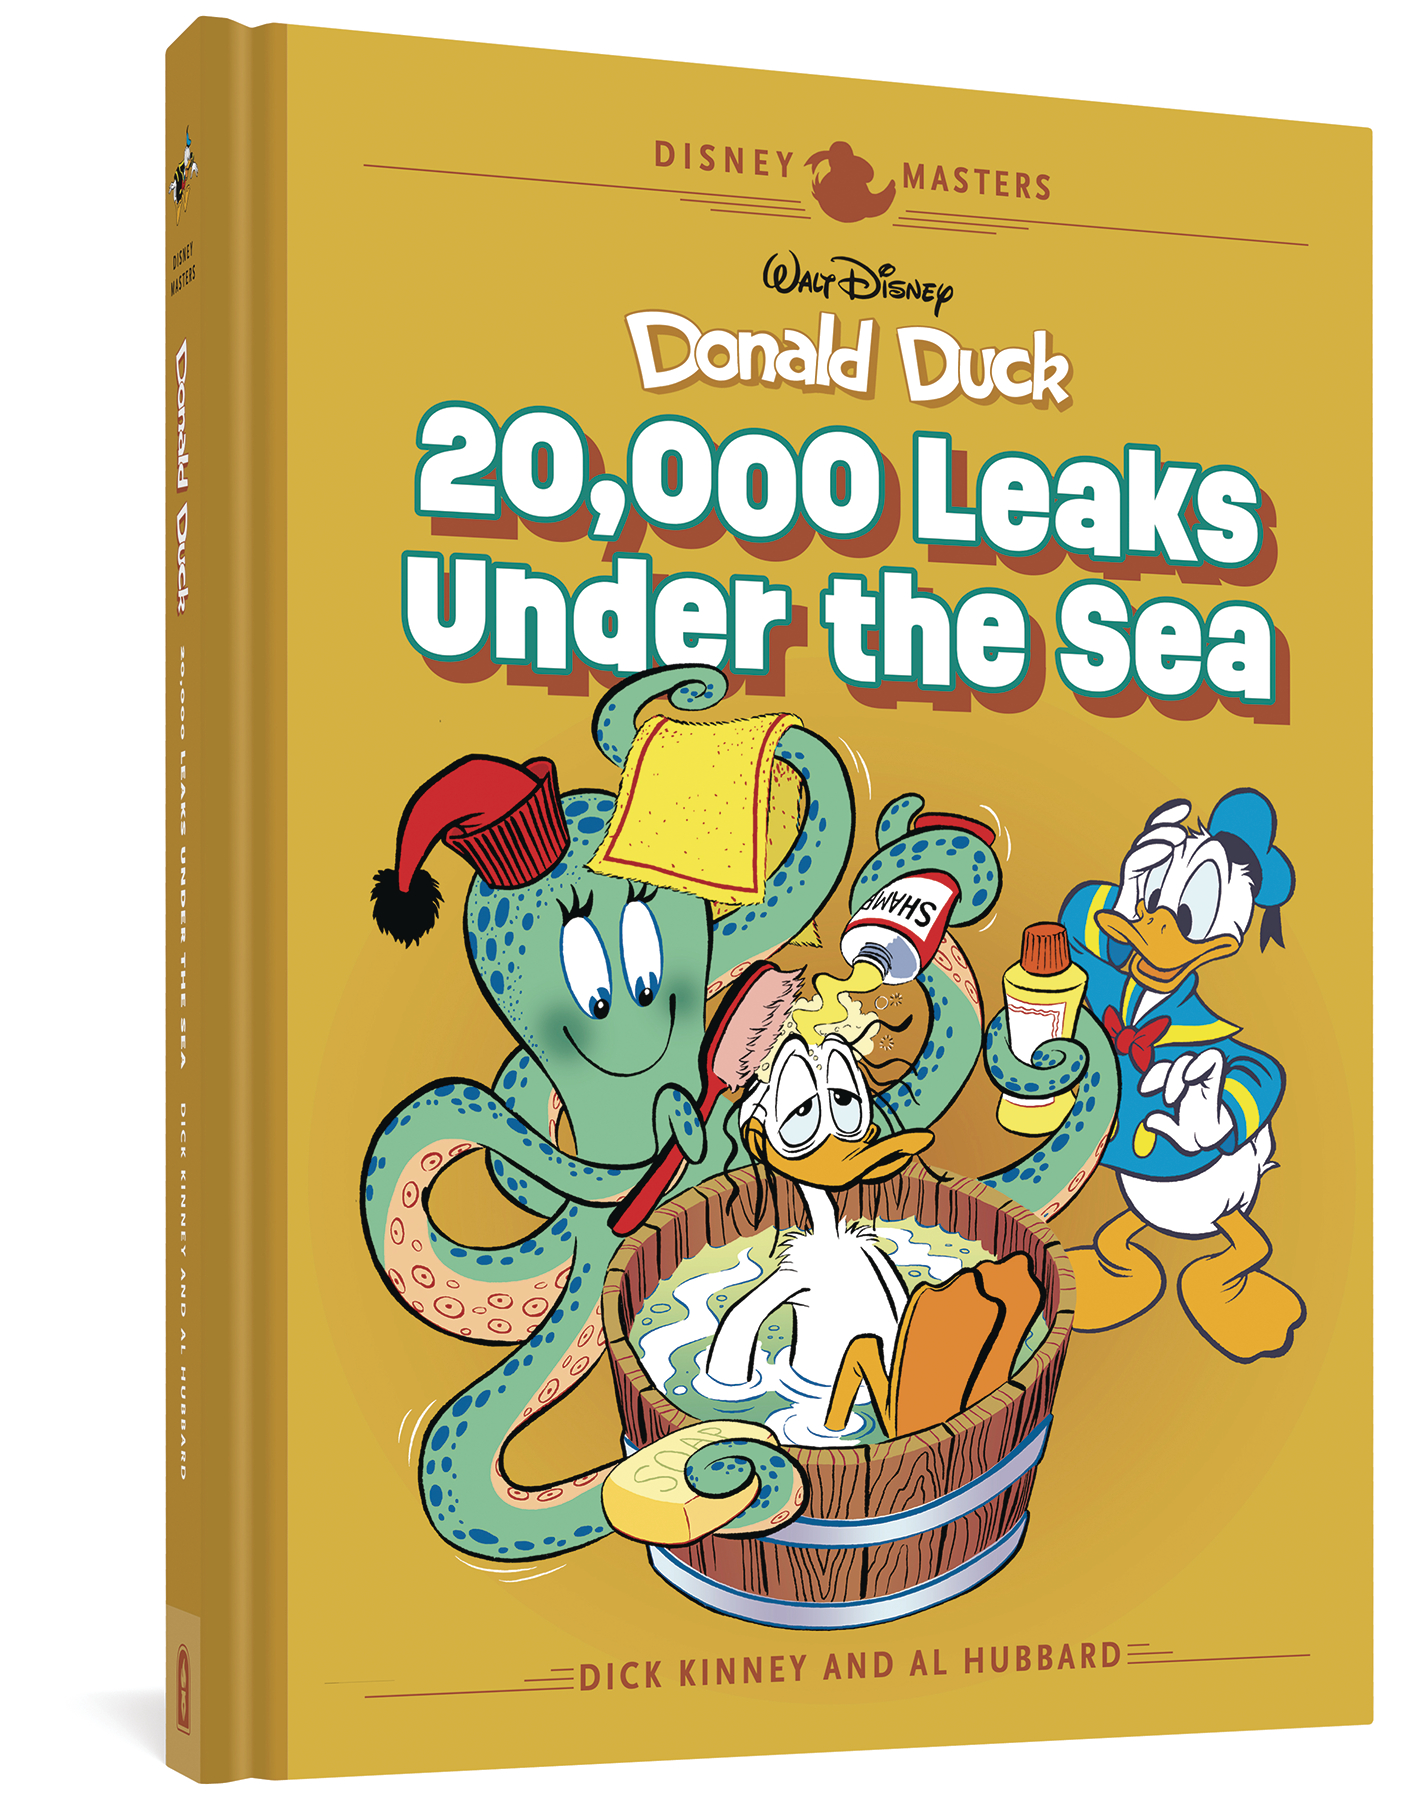 Disney Masters Hardcover Volume 20 Donald Duck 20,000 Leaks Under The Sea Hardcover